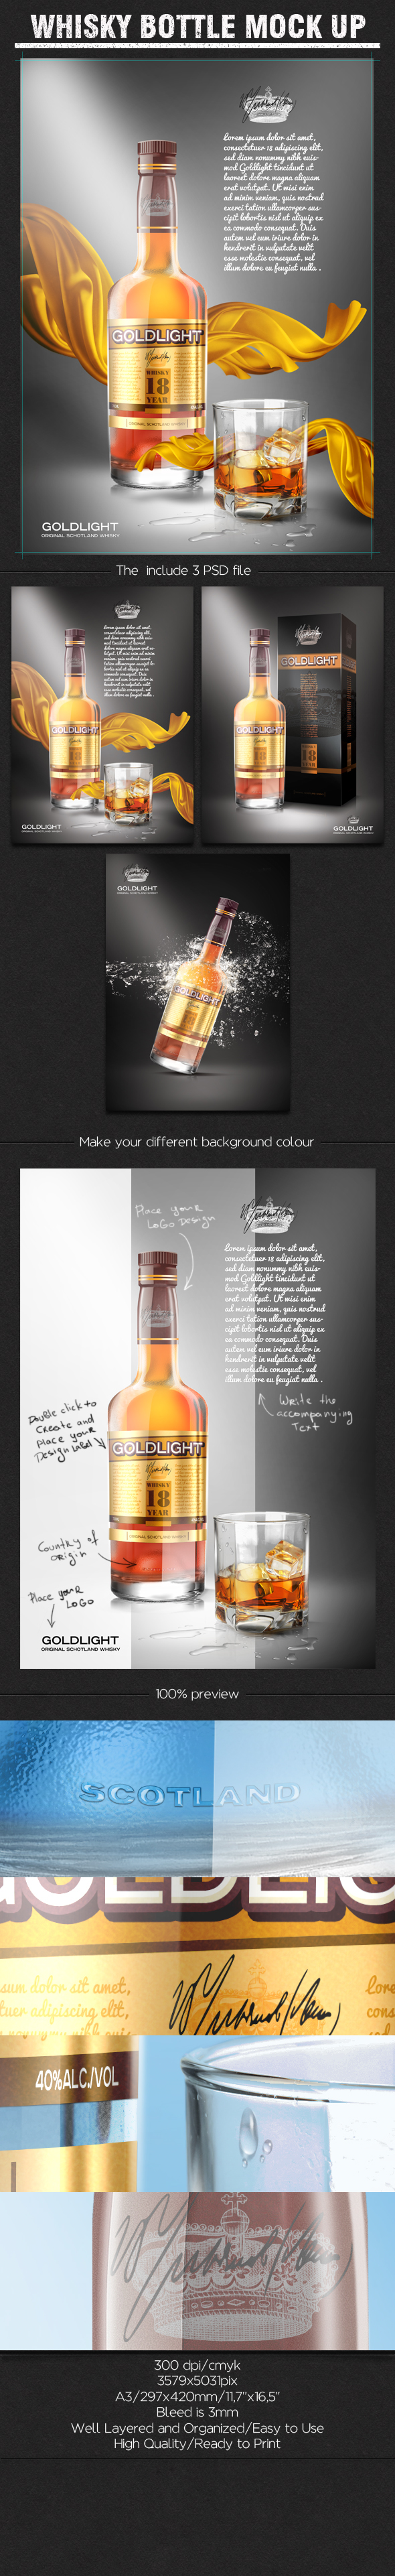 Whisky Bottle Mockup Free PSD